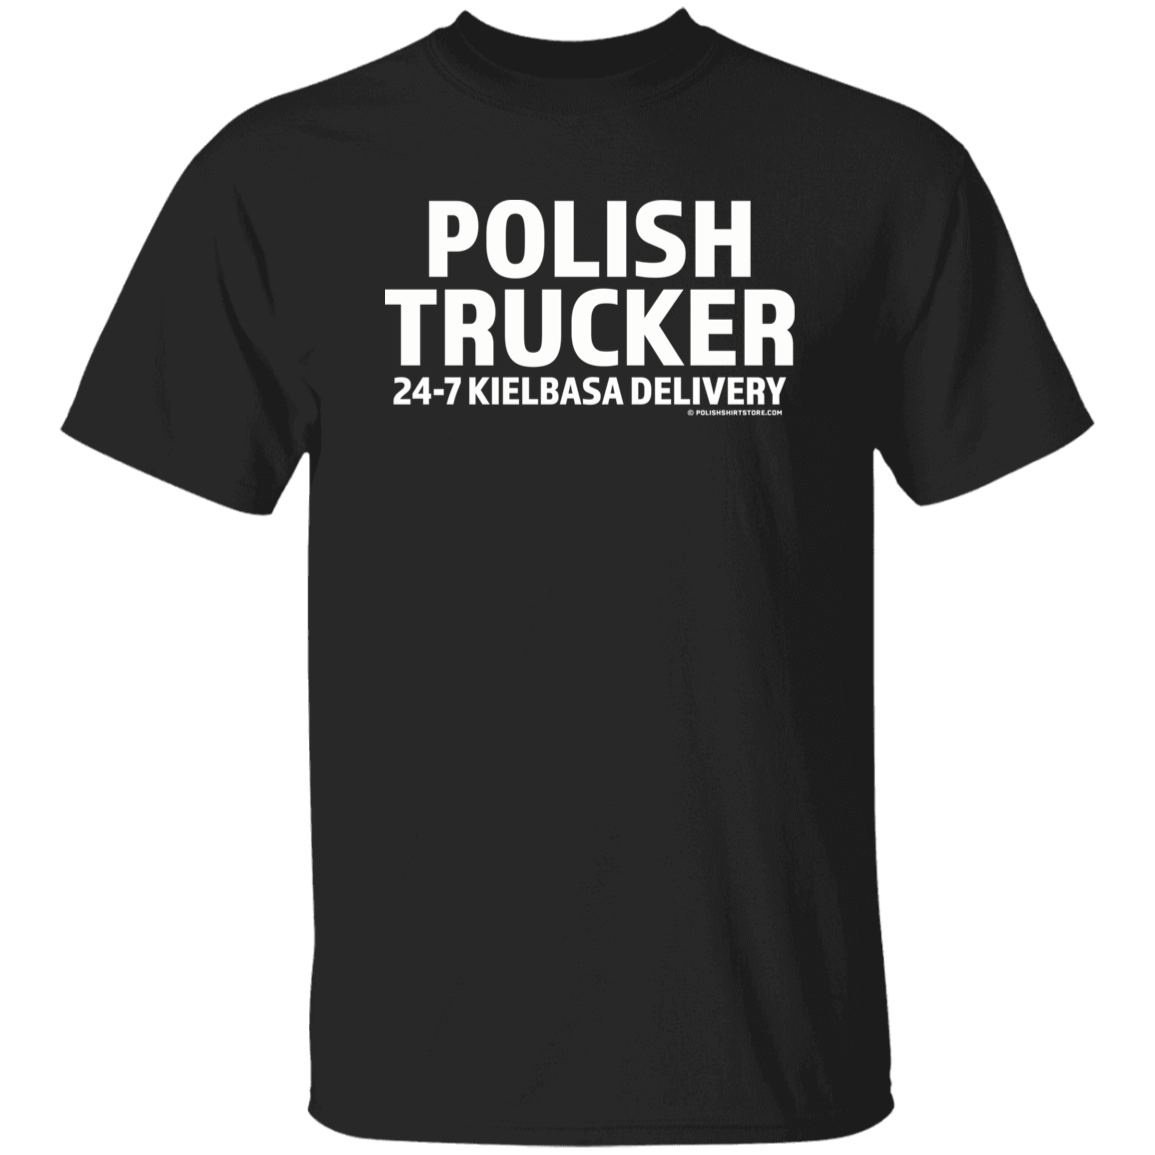 Polish Trucker 24-7 Kielbasa Delivery Apparel CustomCat G500 5.3 oz. T-Shirt Black S